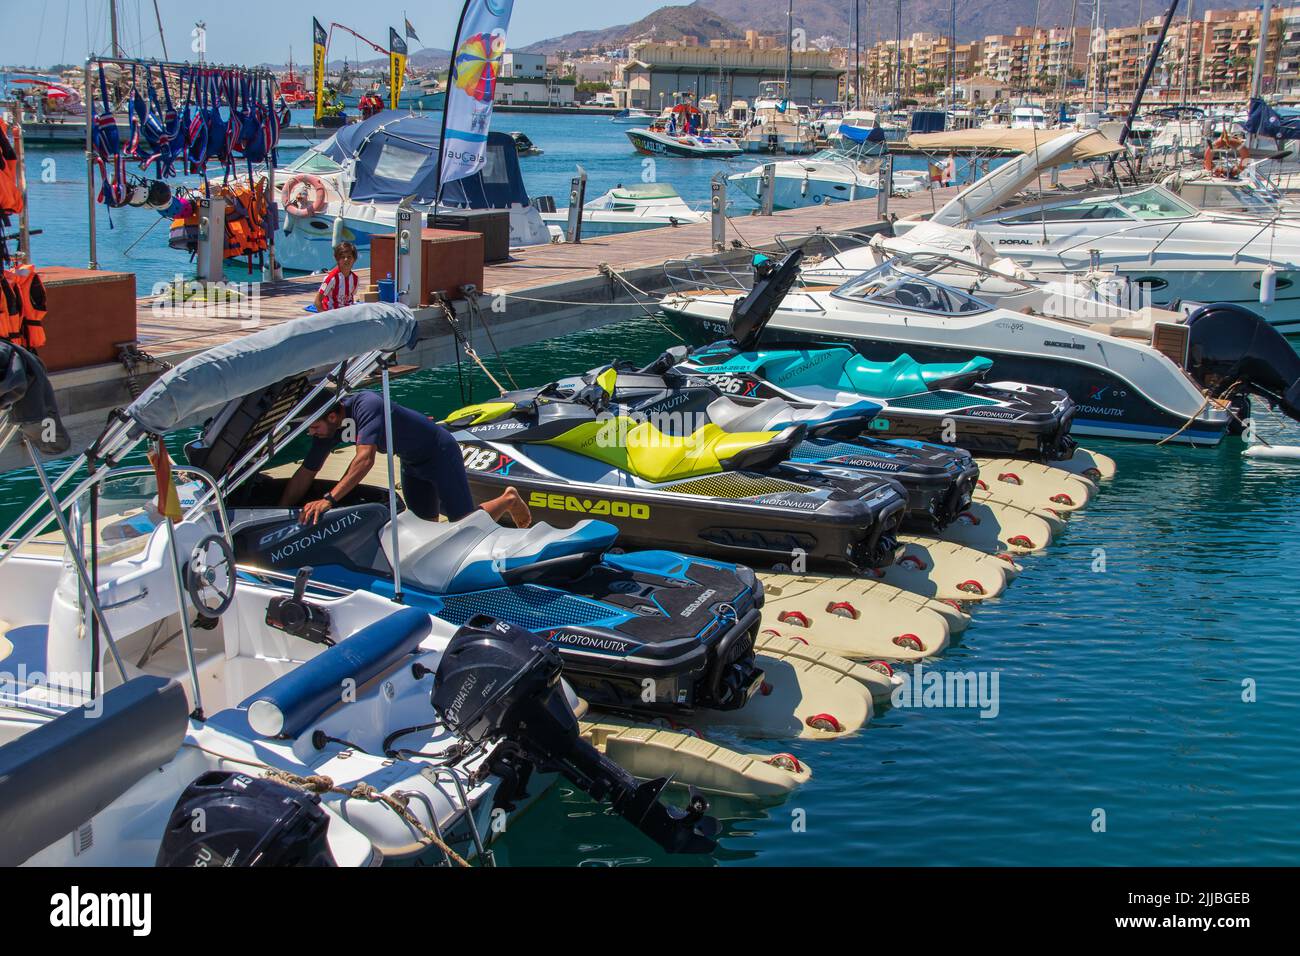 Boat, Jet Ski For Hire on the Marina at Garrucha, Almeria province, Andalucía Spain Stock Photo